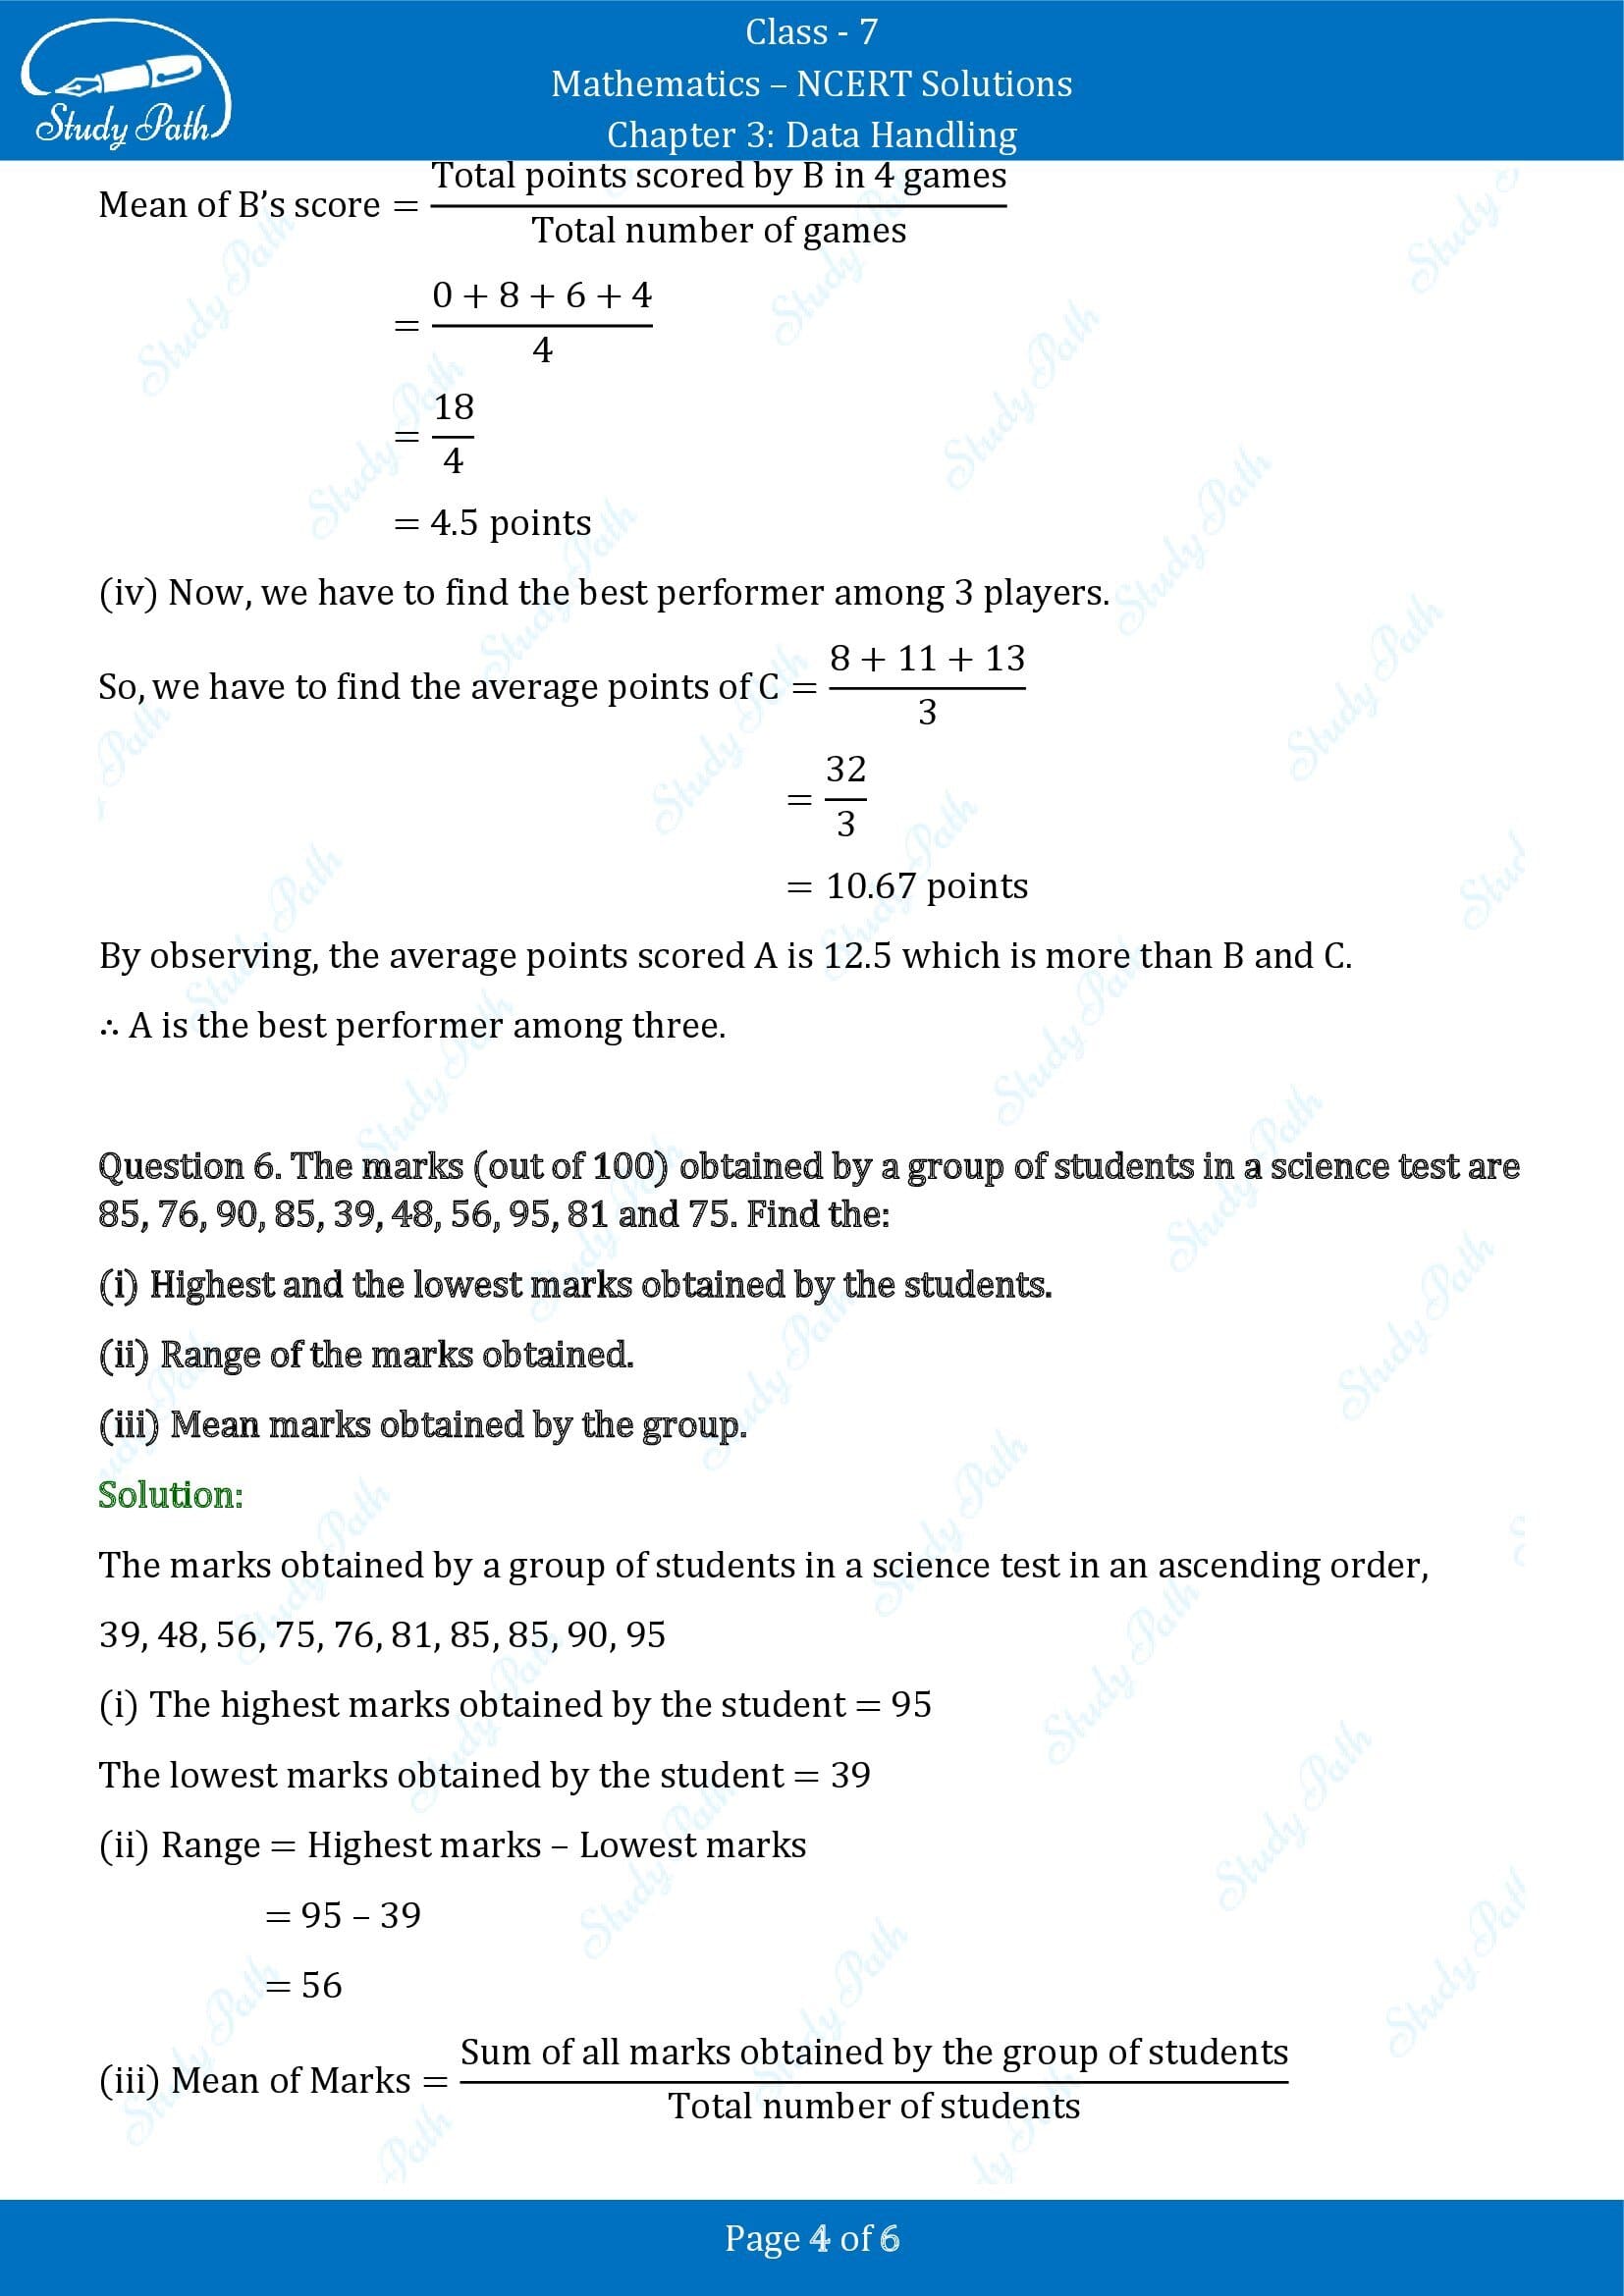 NCERT Solutions for Class 7 Maths Chapter 3 Data Handling Exercise 3.1 00004